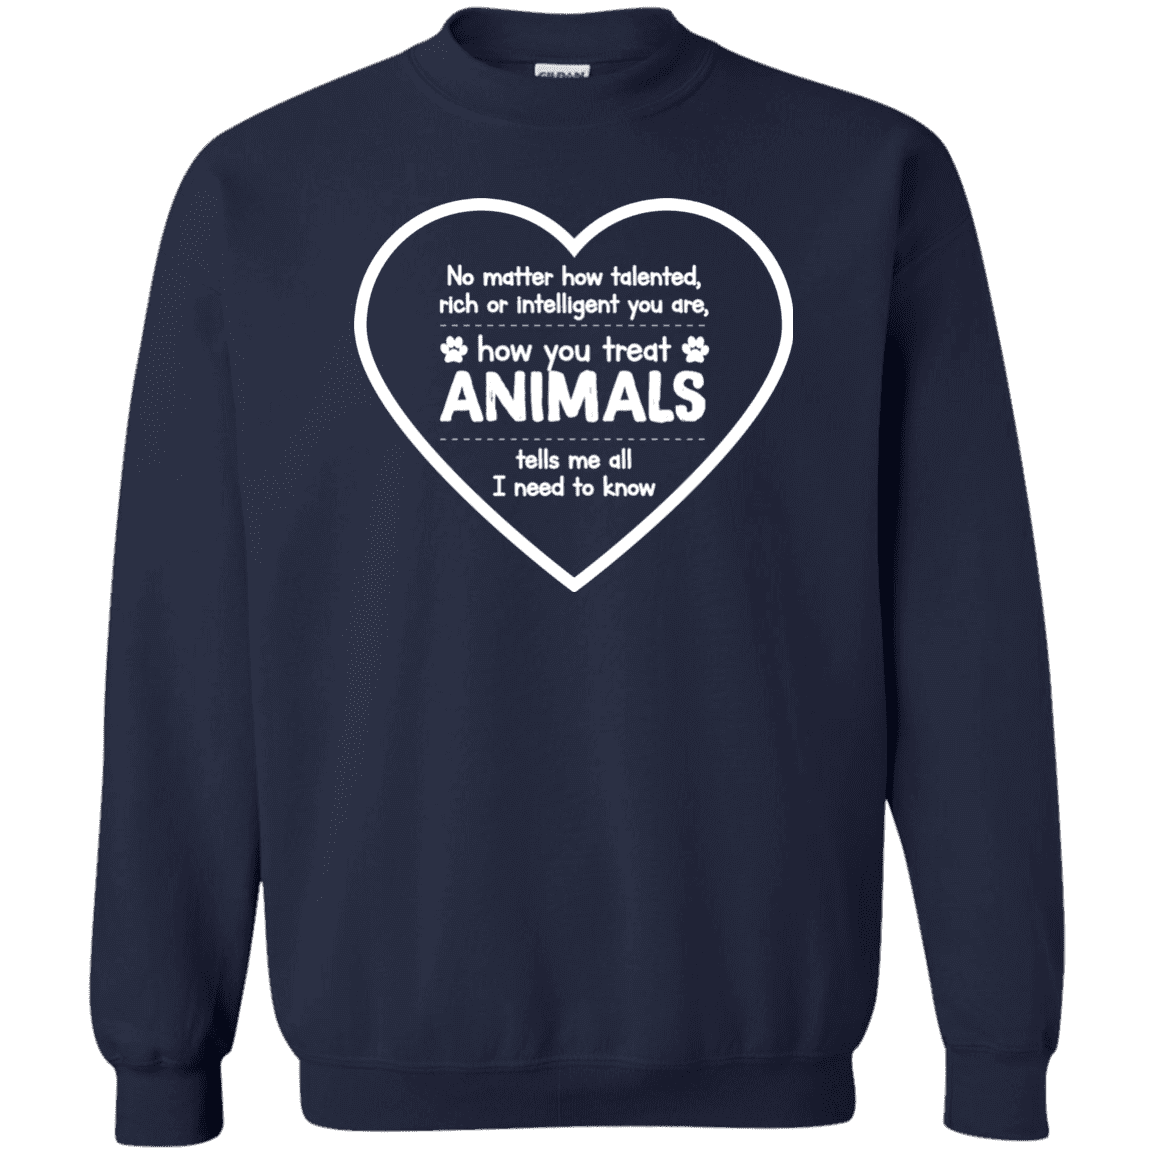 How You Treat Animals - Sweatshirt.